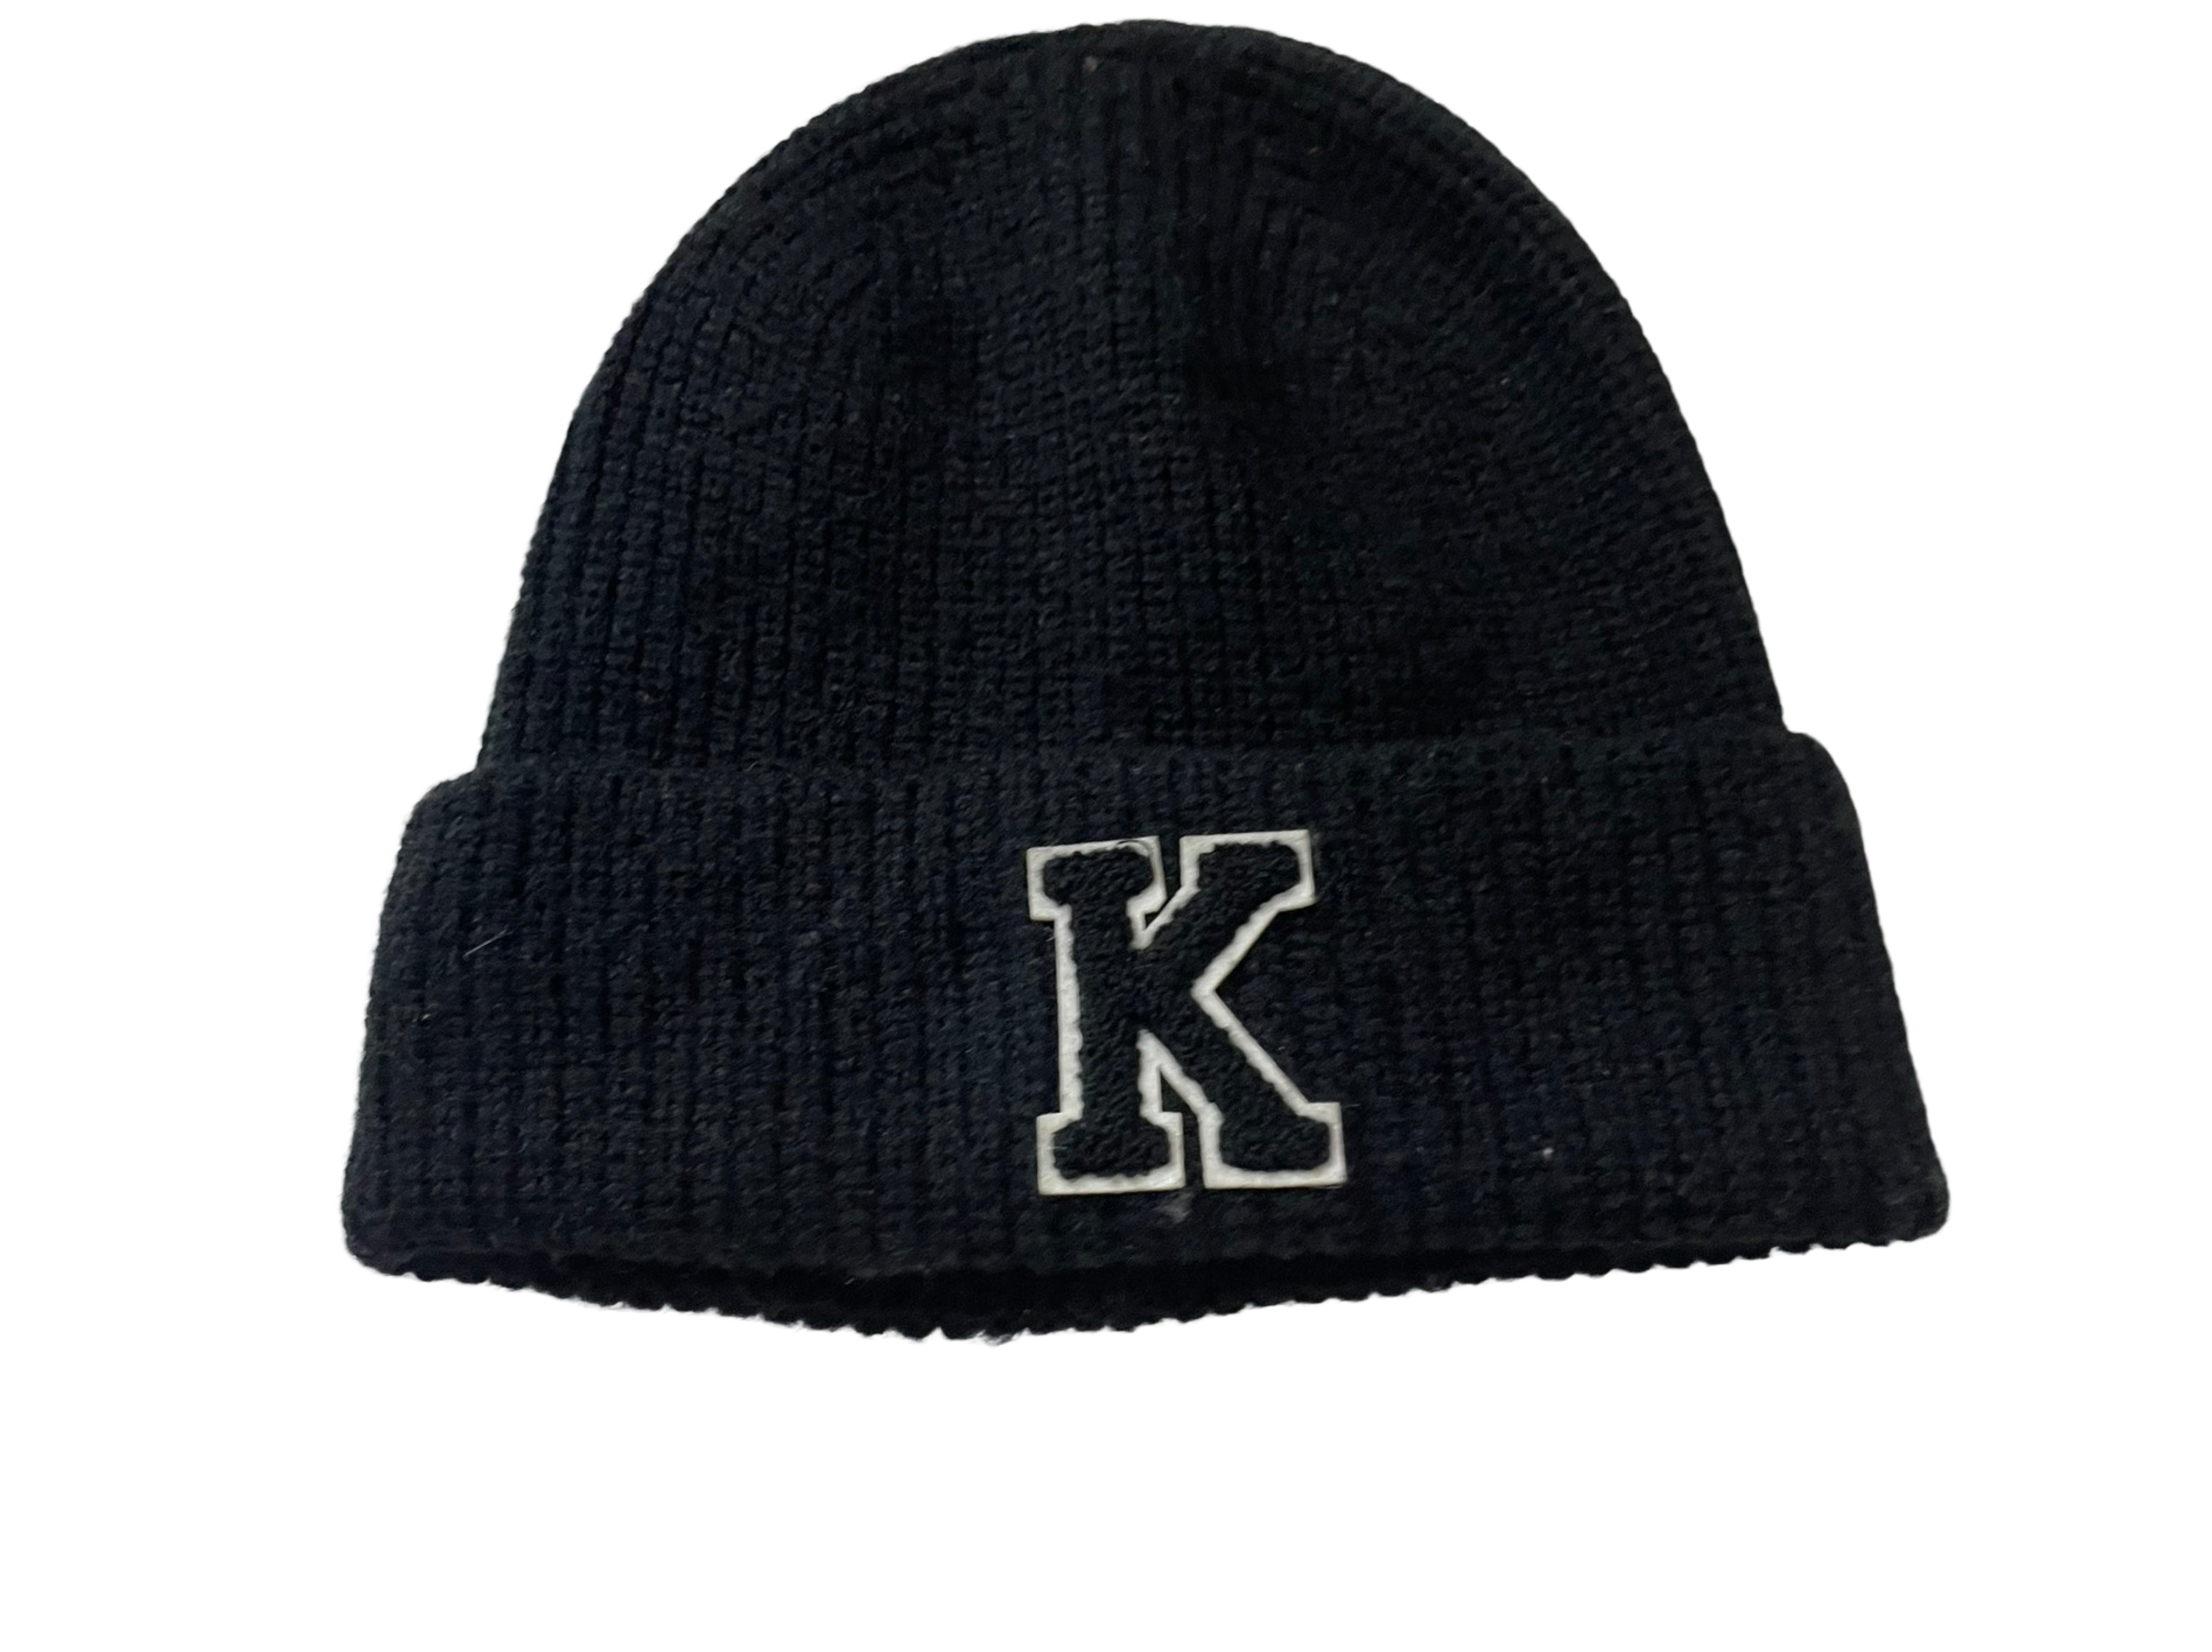 K Embroidery Adjustable Knitted Ski winter Black Hats Cap SKU|4275